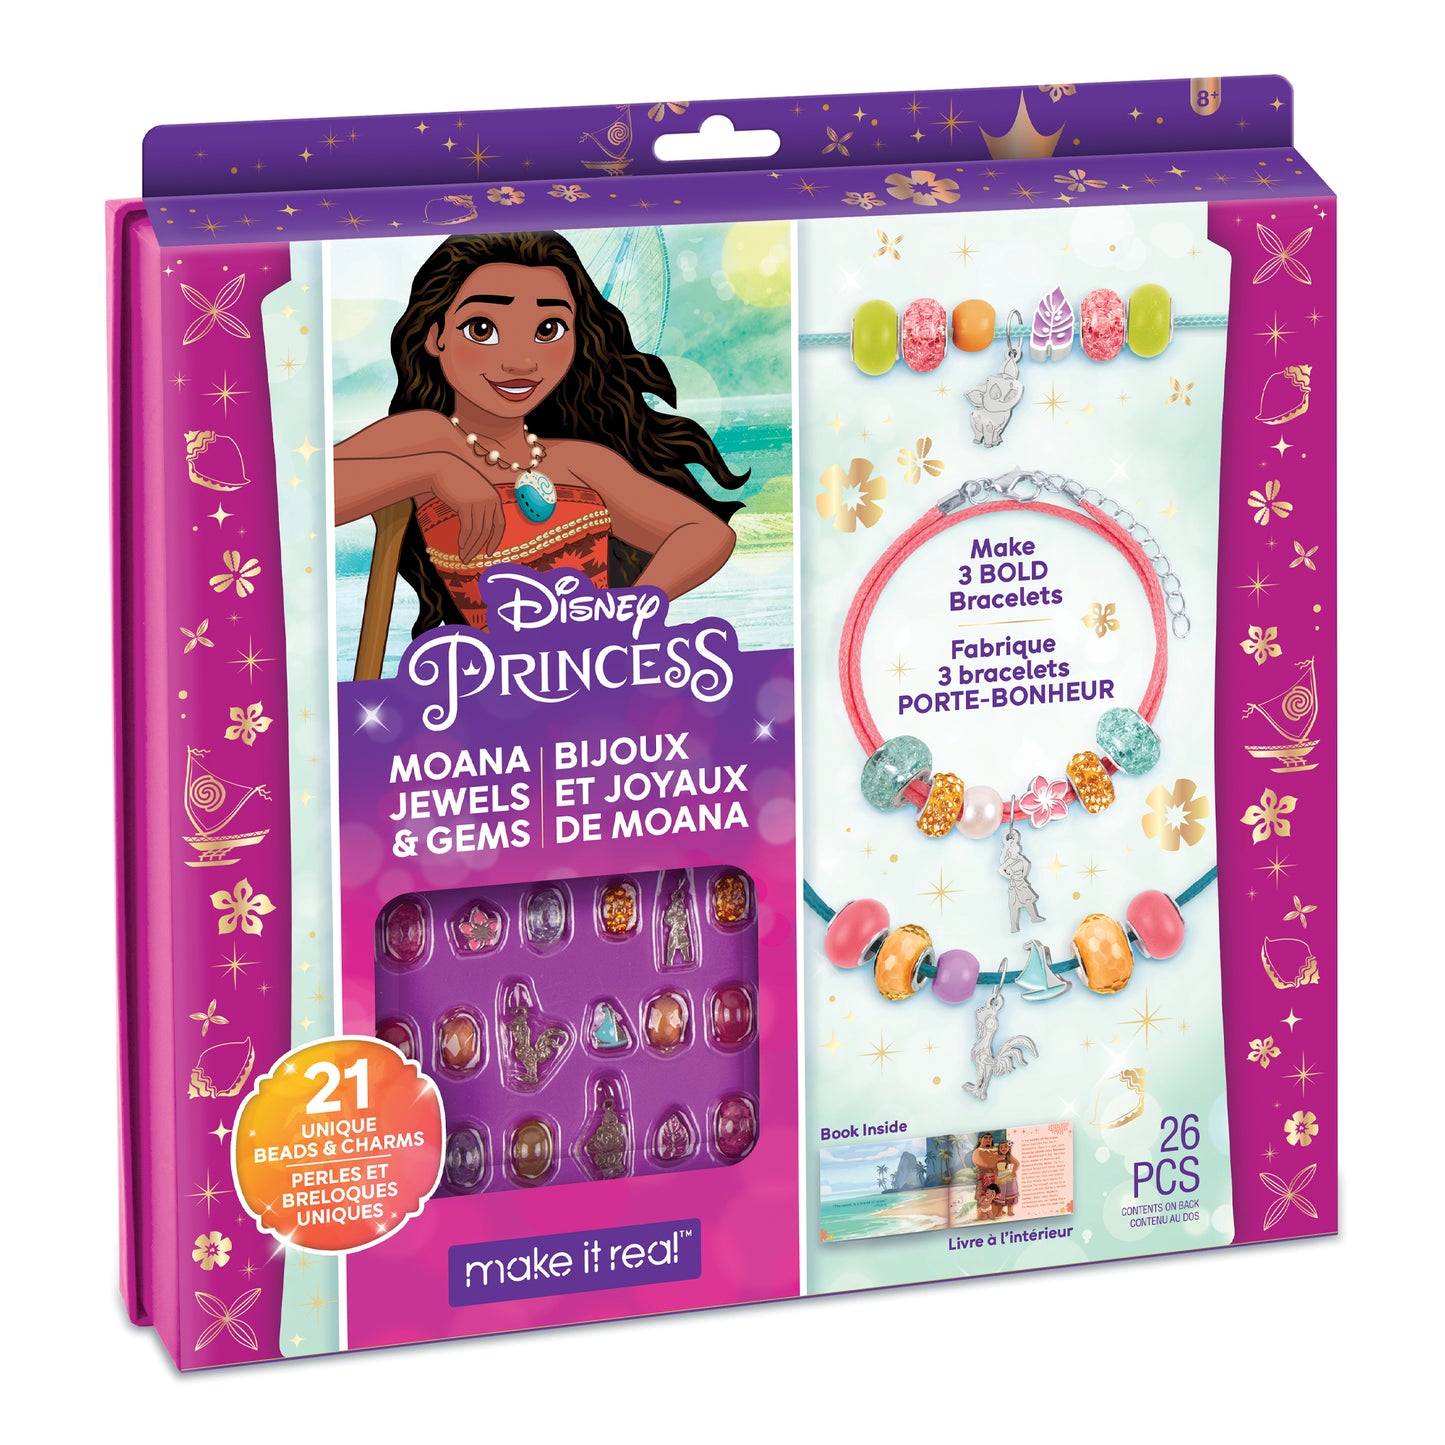 Disney Princess Moana Jewels and Gems